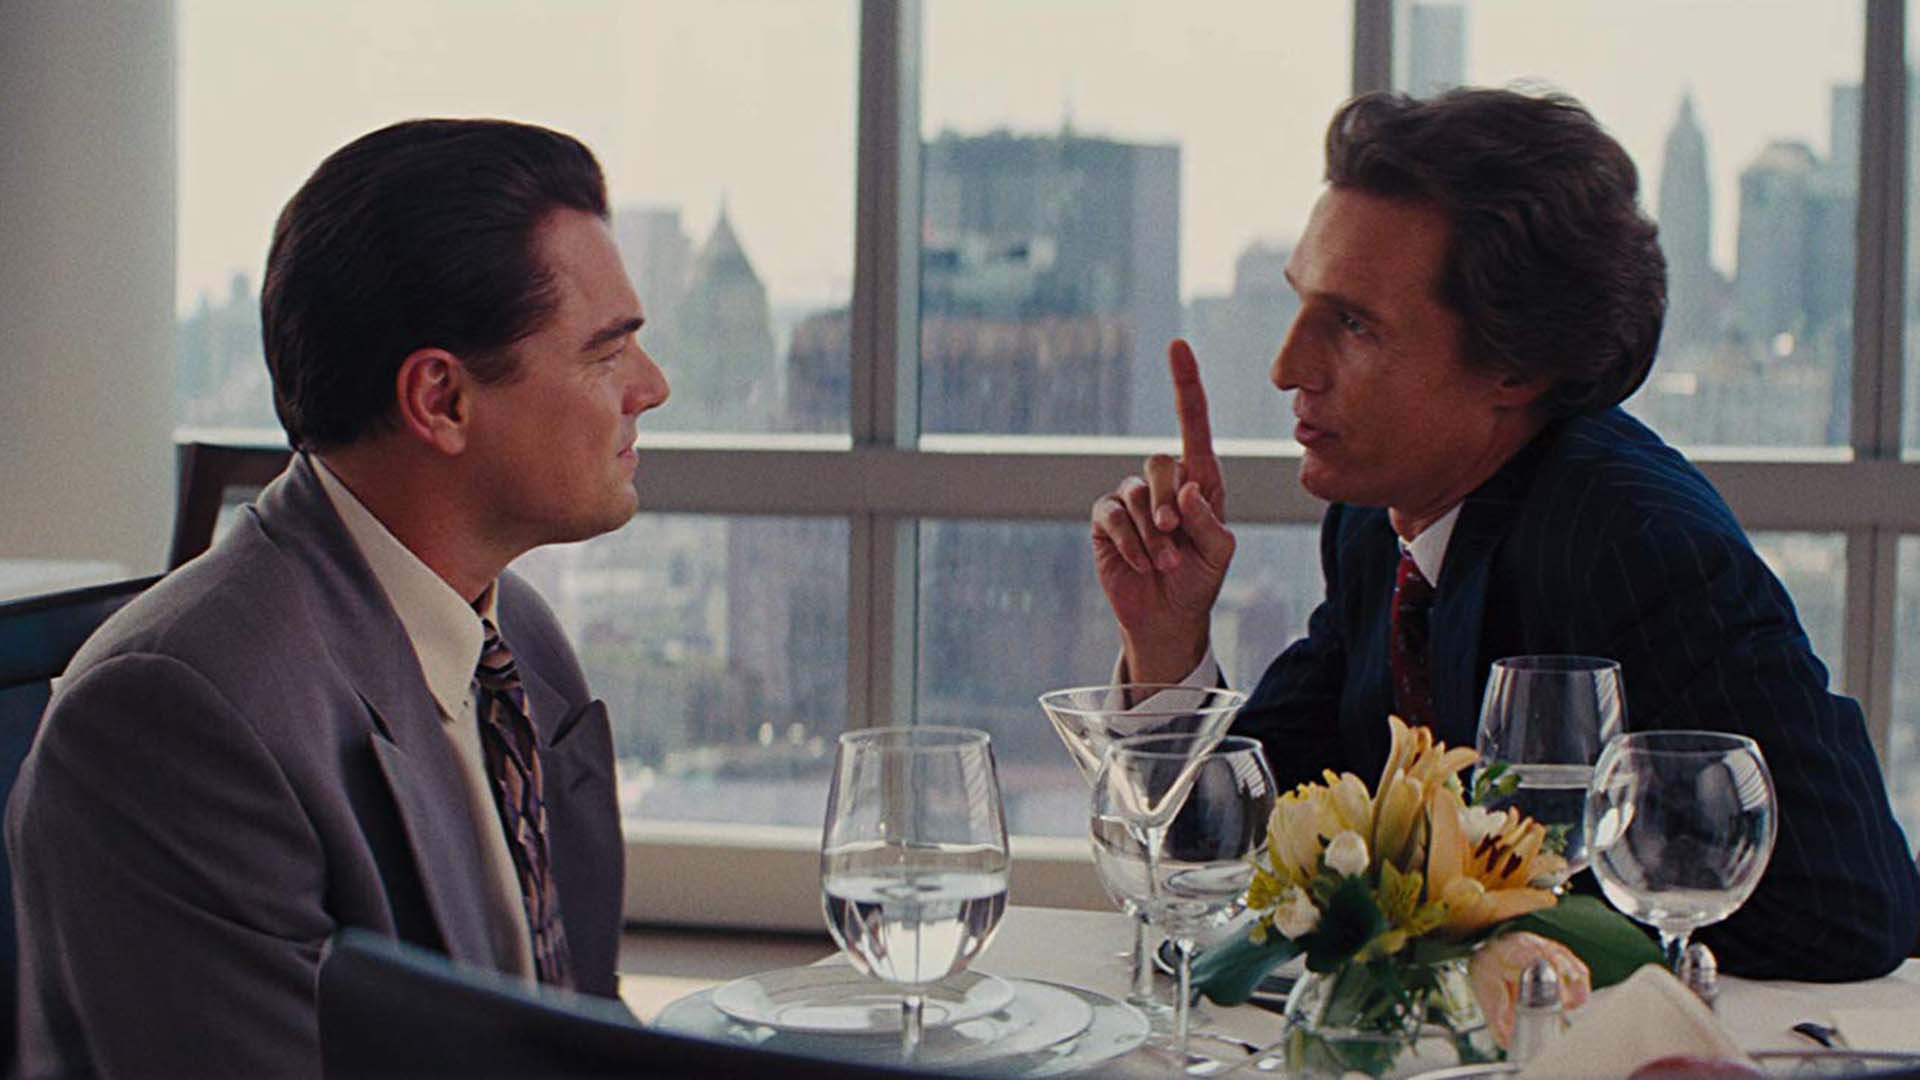 Matthew McConaughey con Leonardo Di Caprio en "The Wolf of Wall Street"